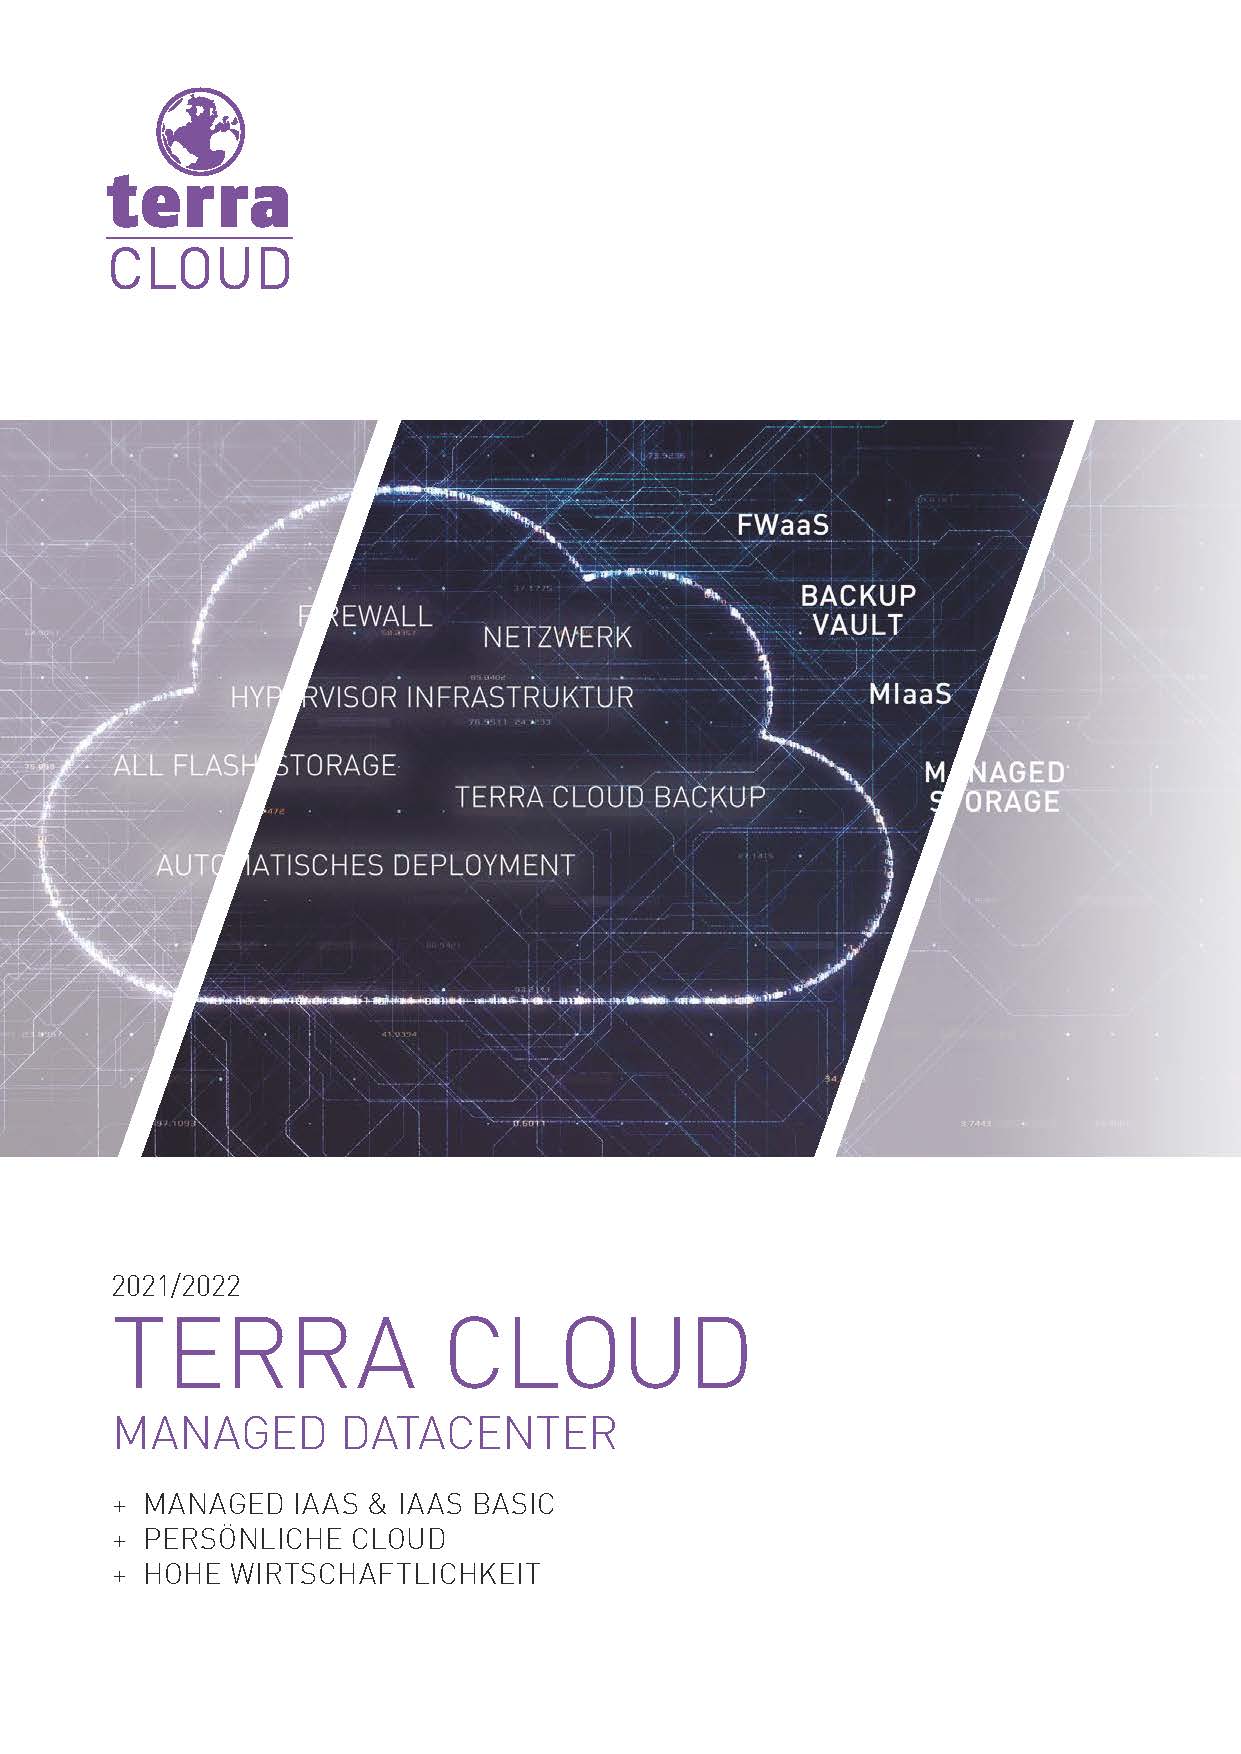 Cloud-Managed-Datacenter-20-21.jpg